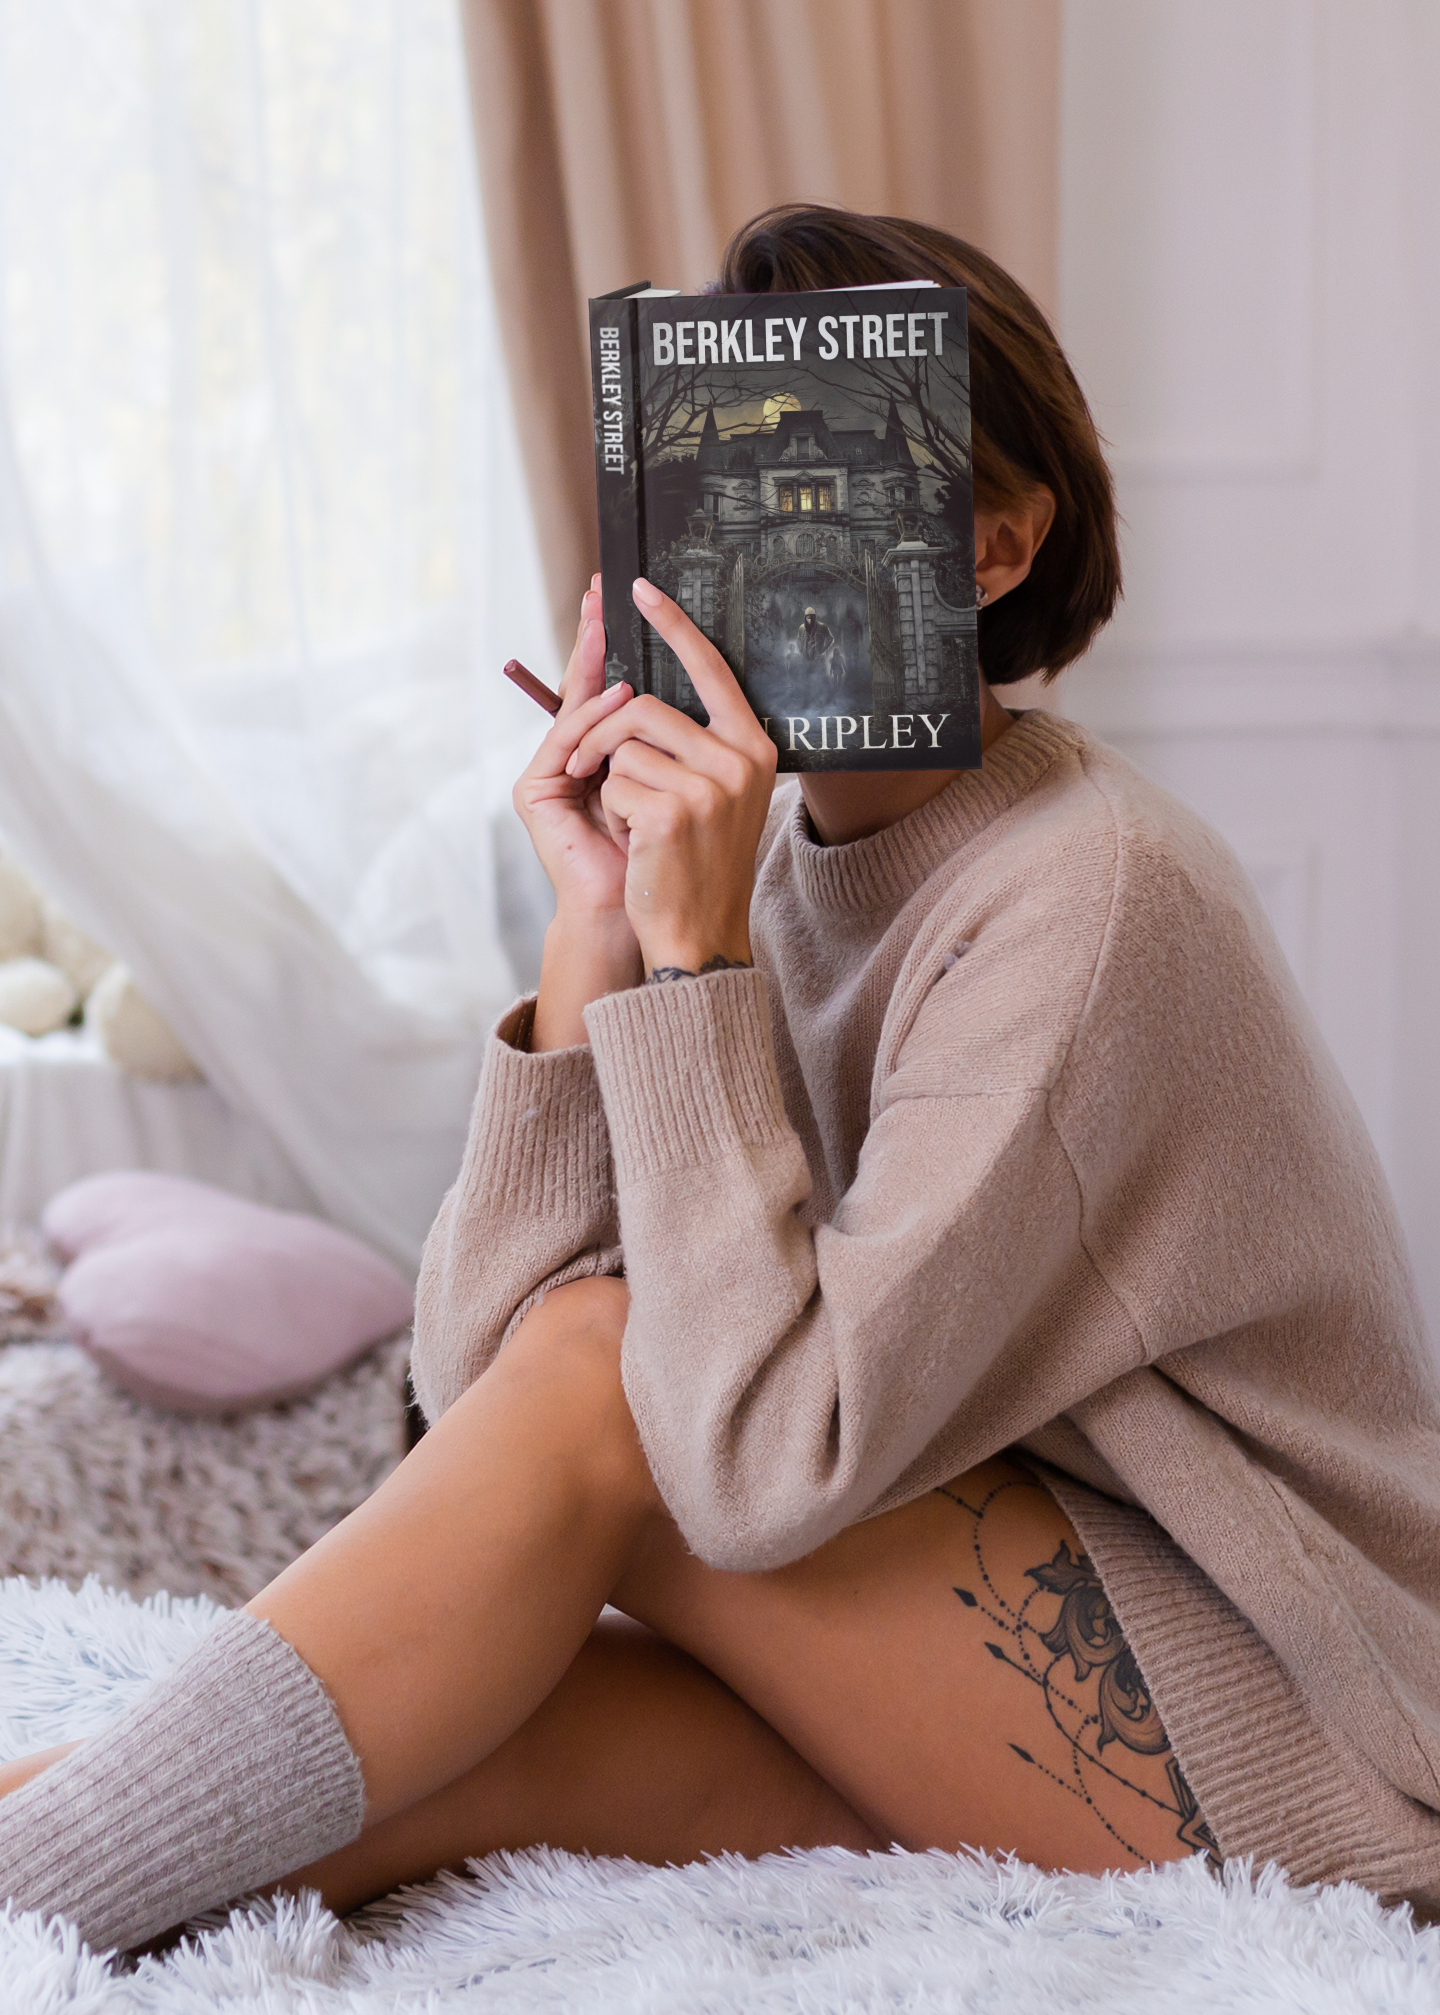 Berkley Street: Berkley Street Series Book 1